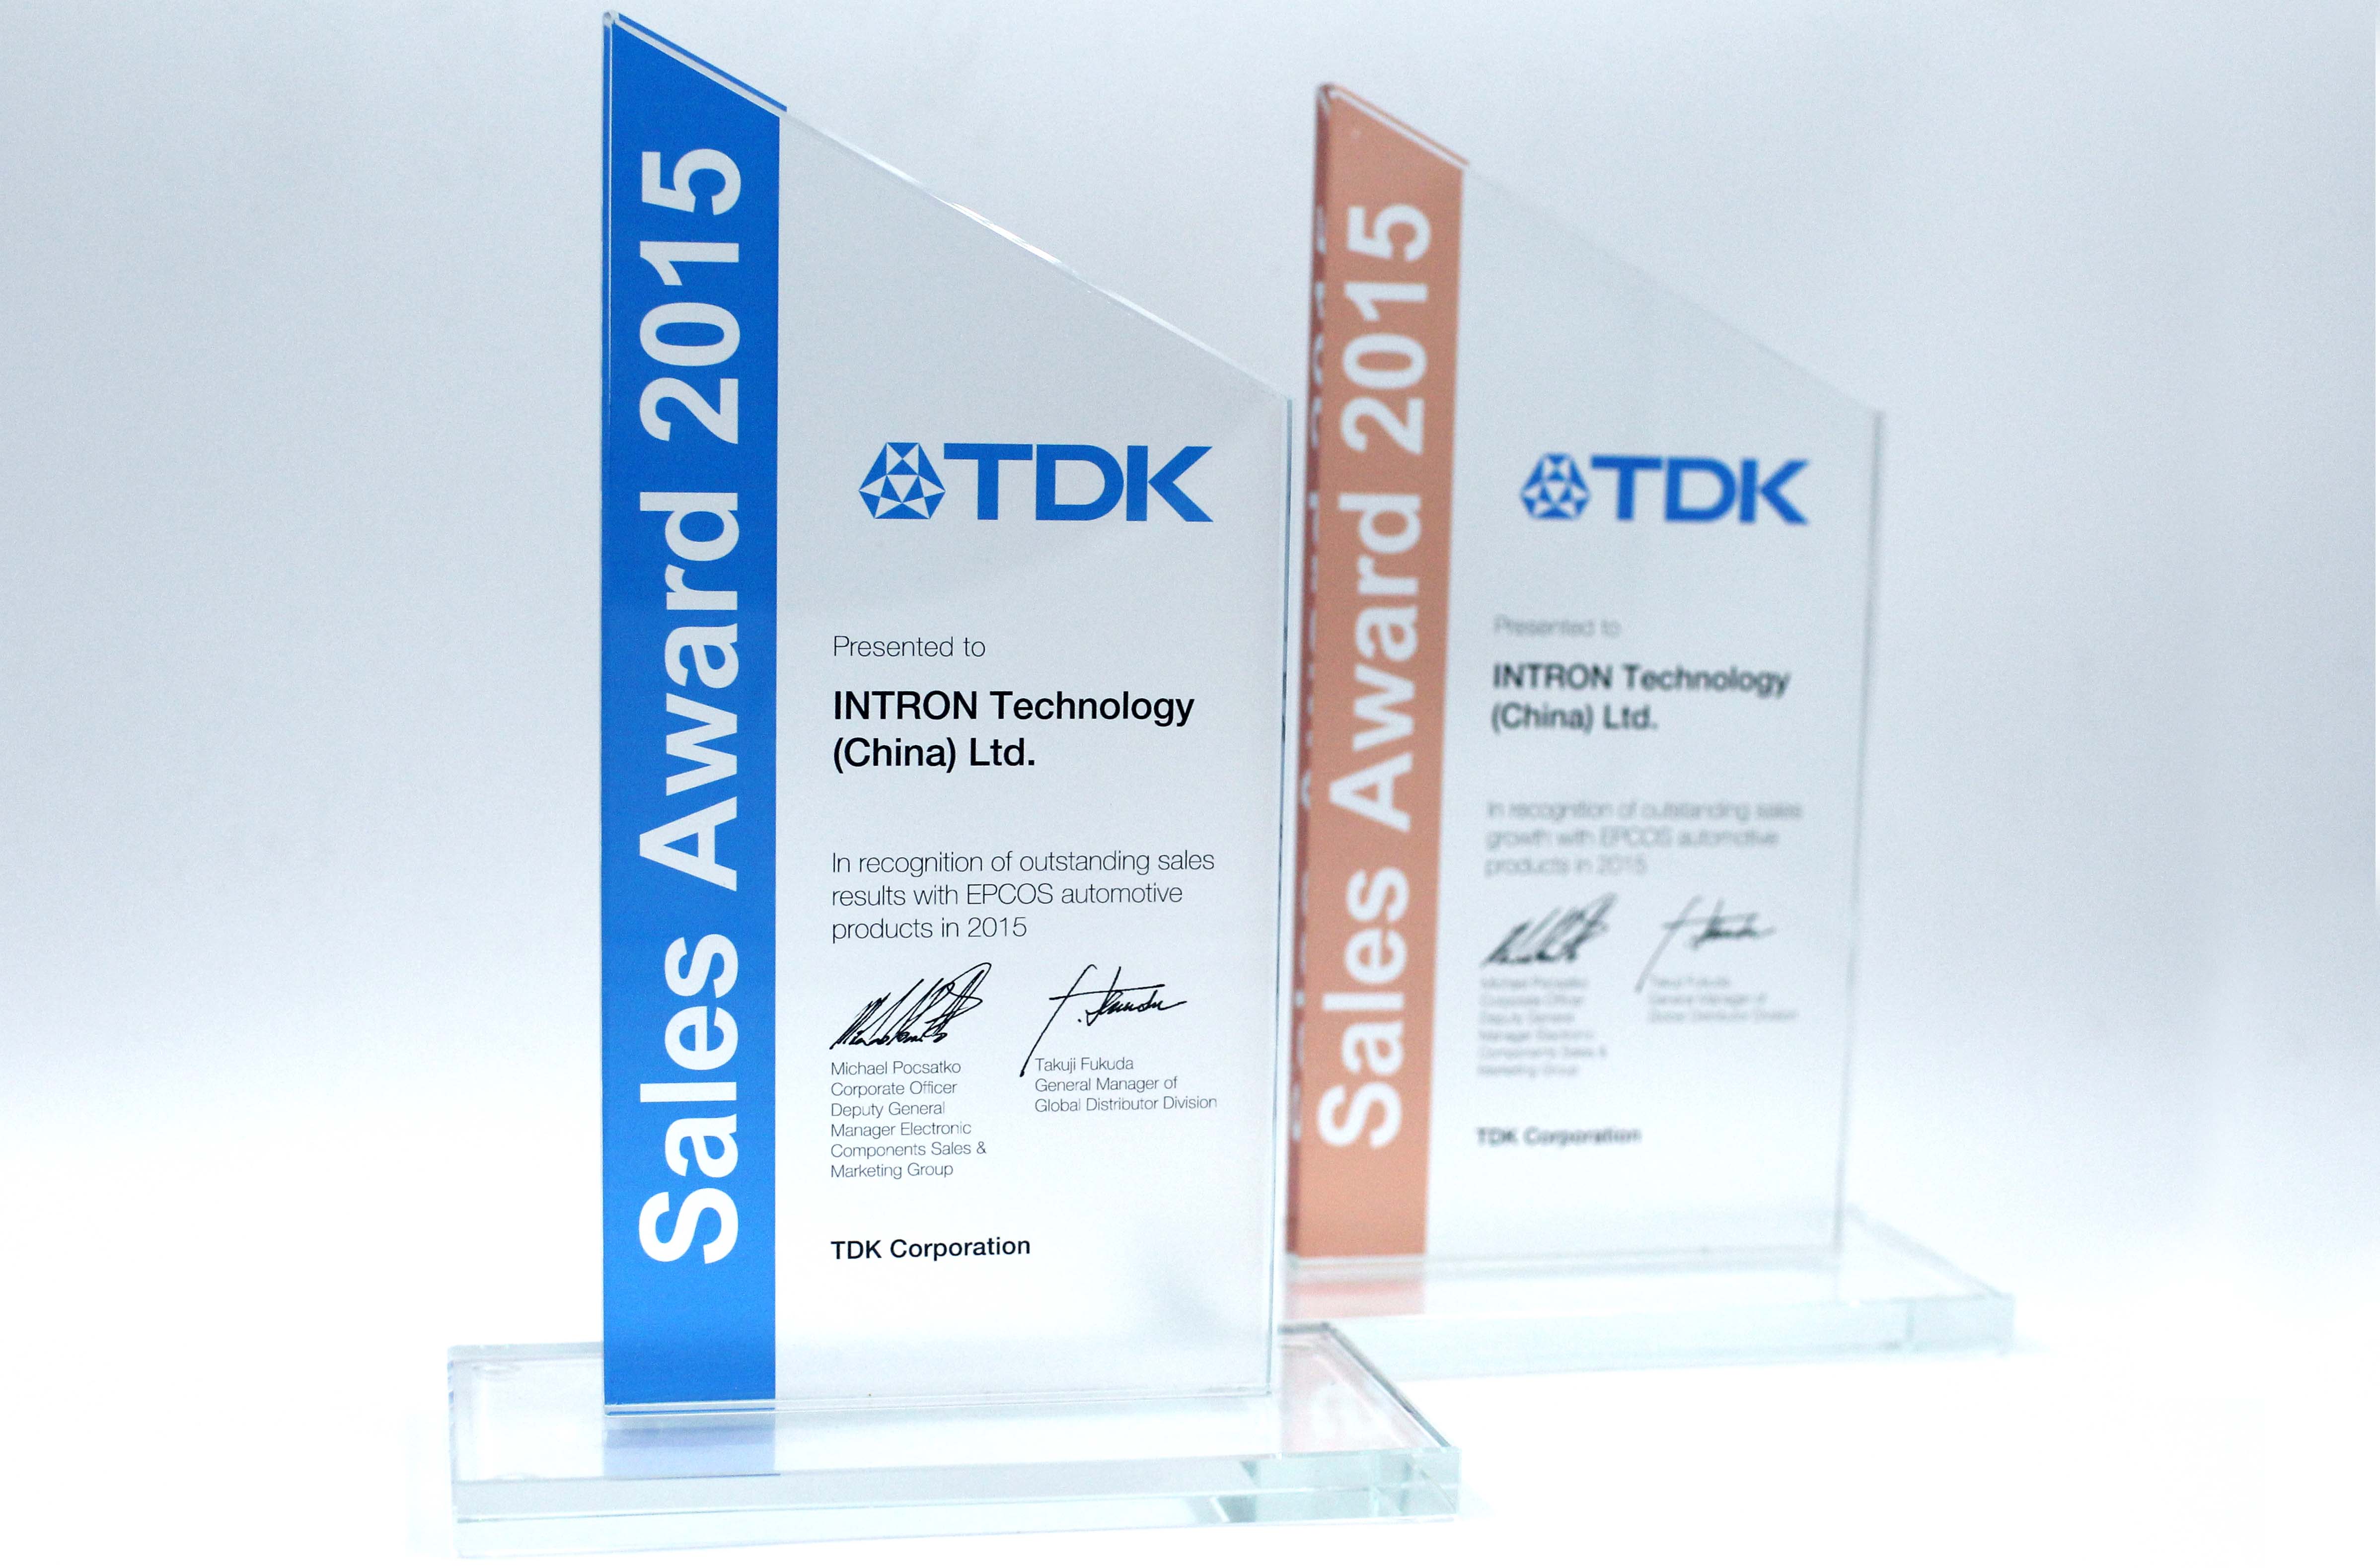 英恒荣获TDK“Outstanding Sales Growth”和“Automotive Total Sales Revenue”两项大奖...